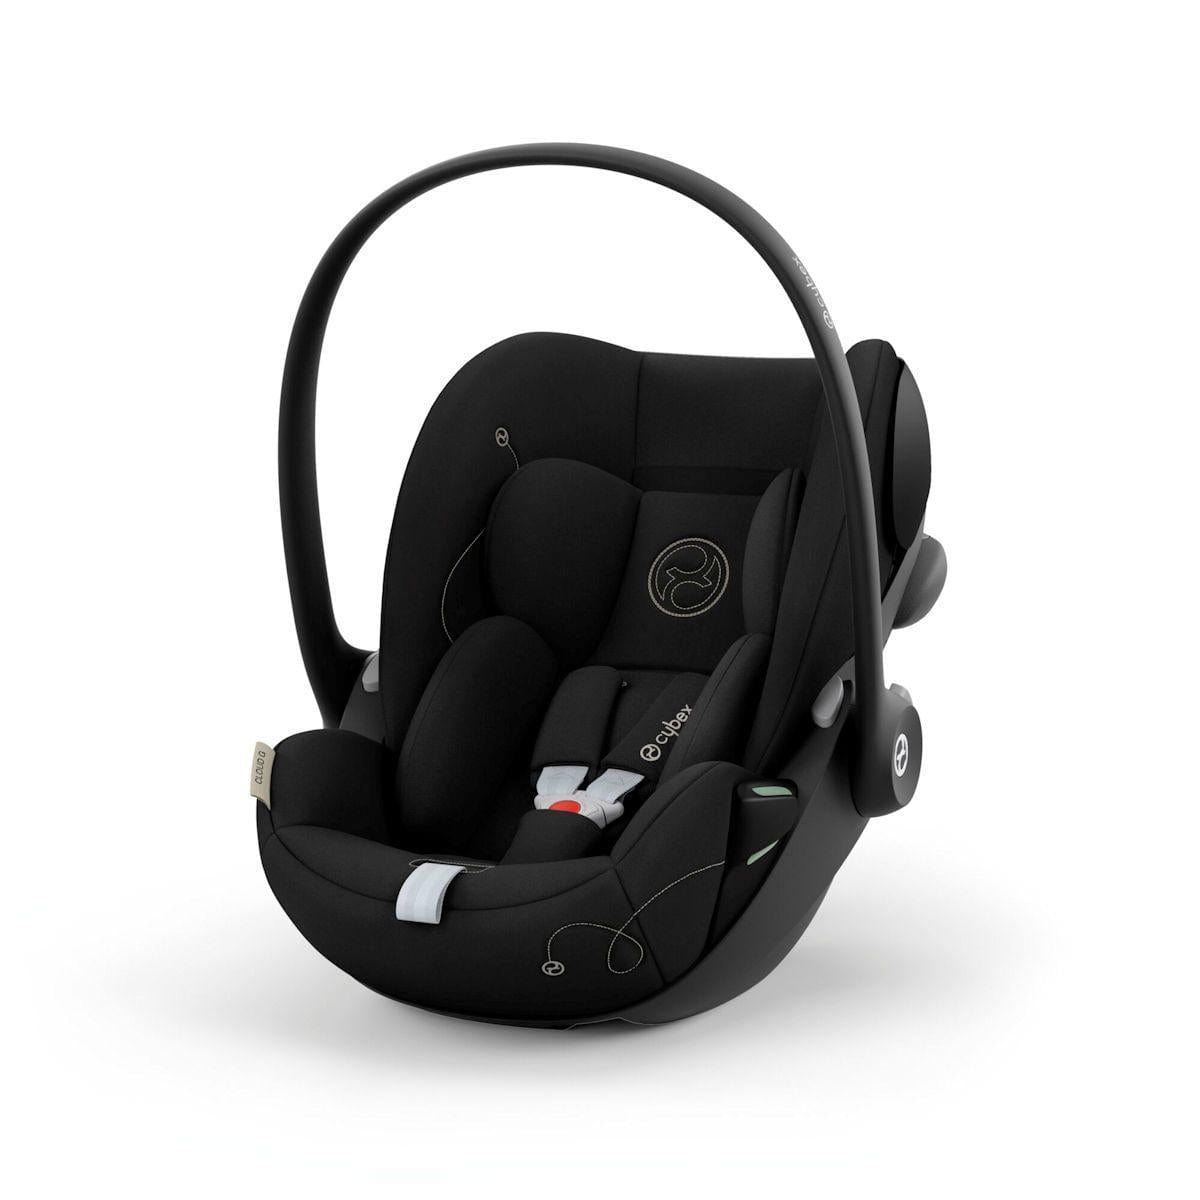 Cybex G Car Seat Bundle in Moon Black Baby Car Seats 15302-MOO-BLK